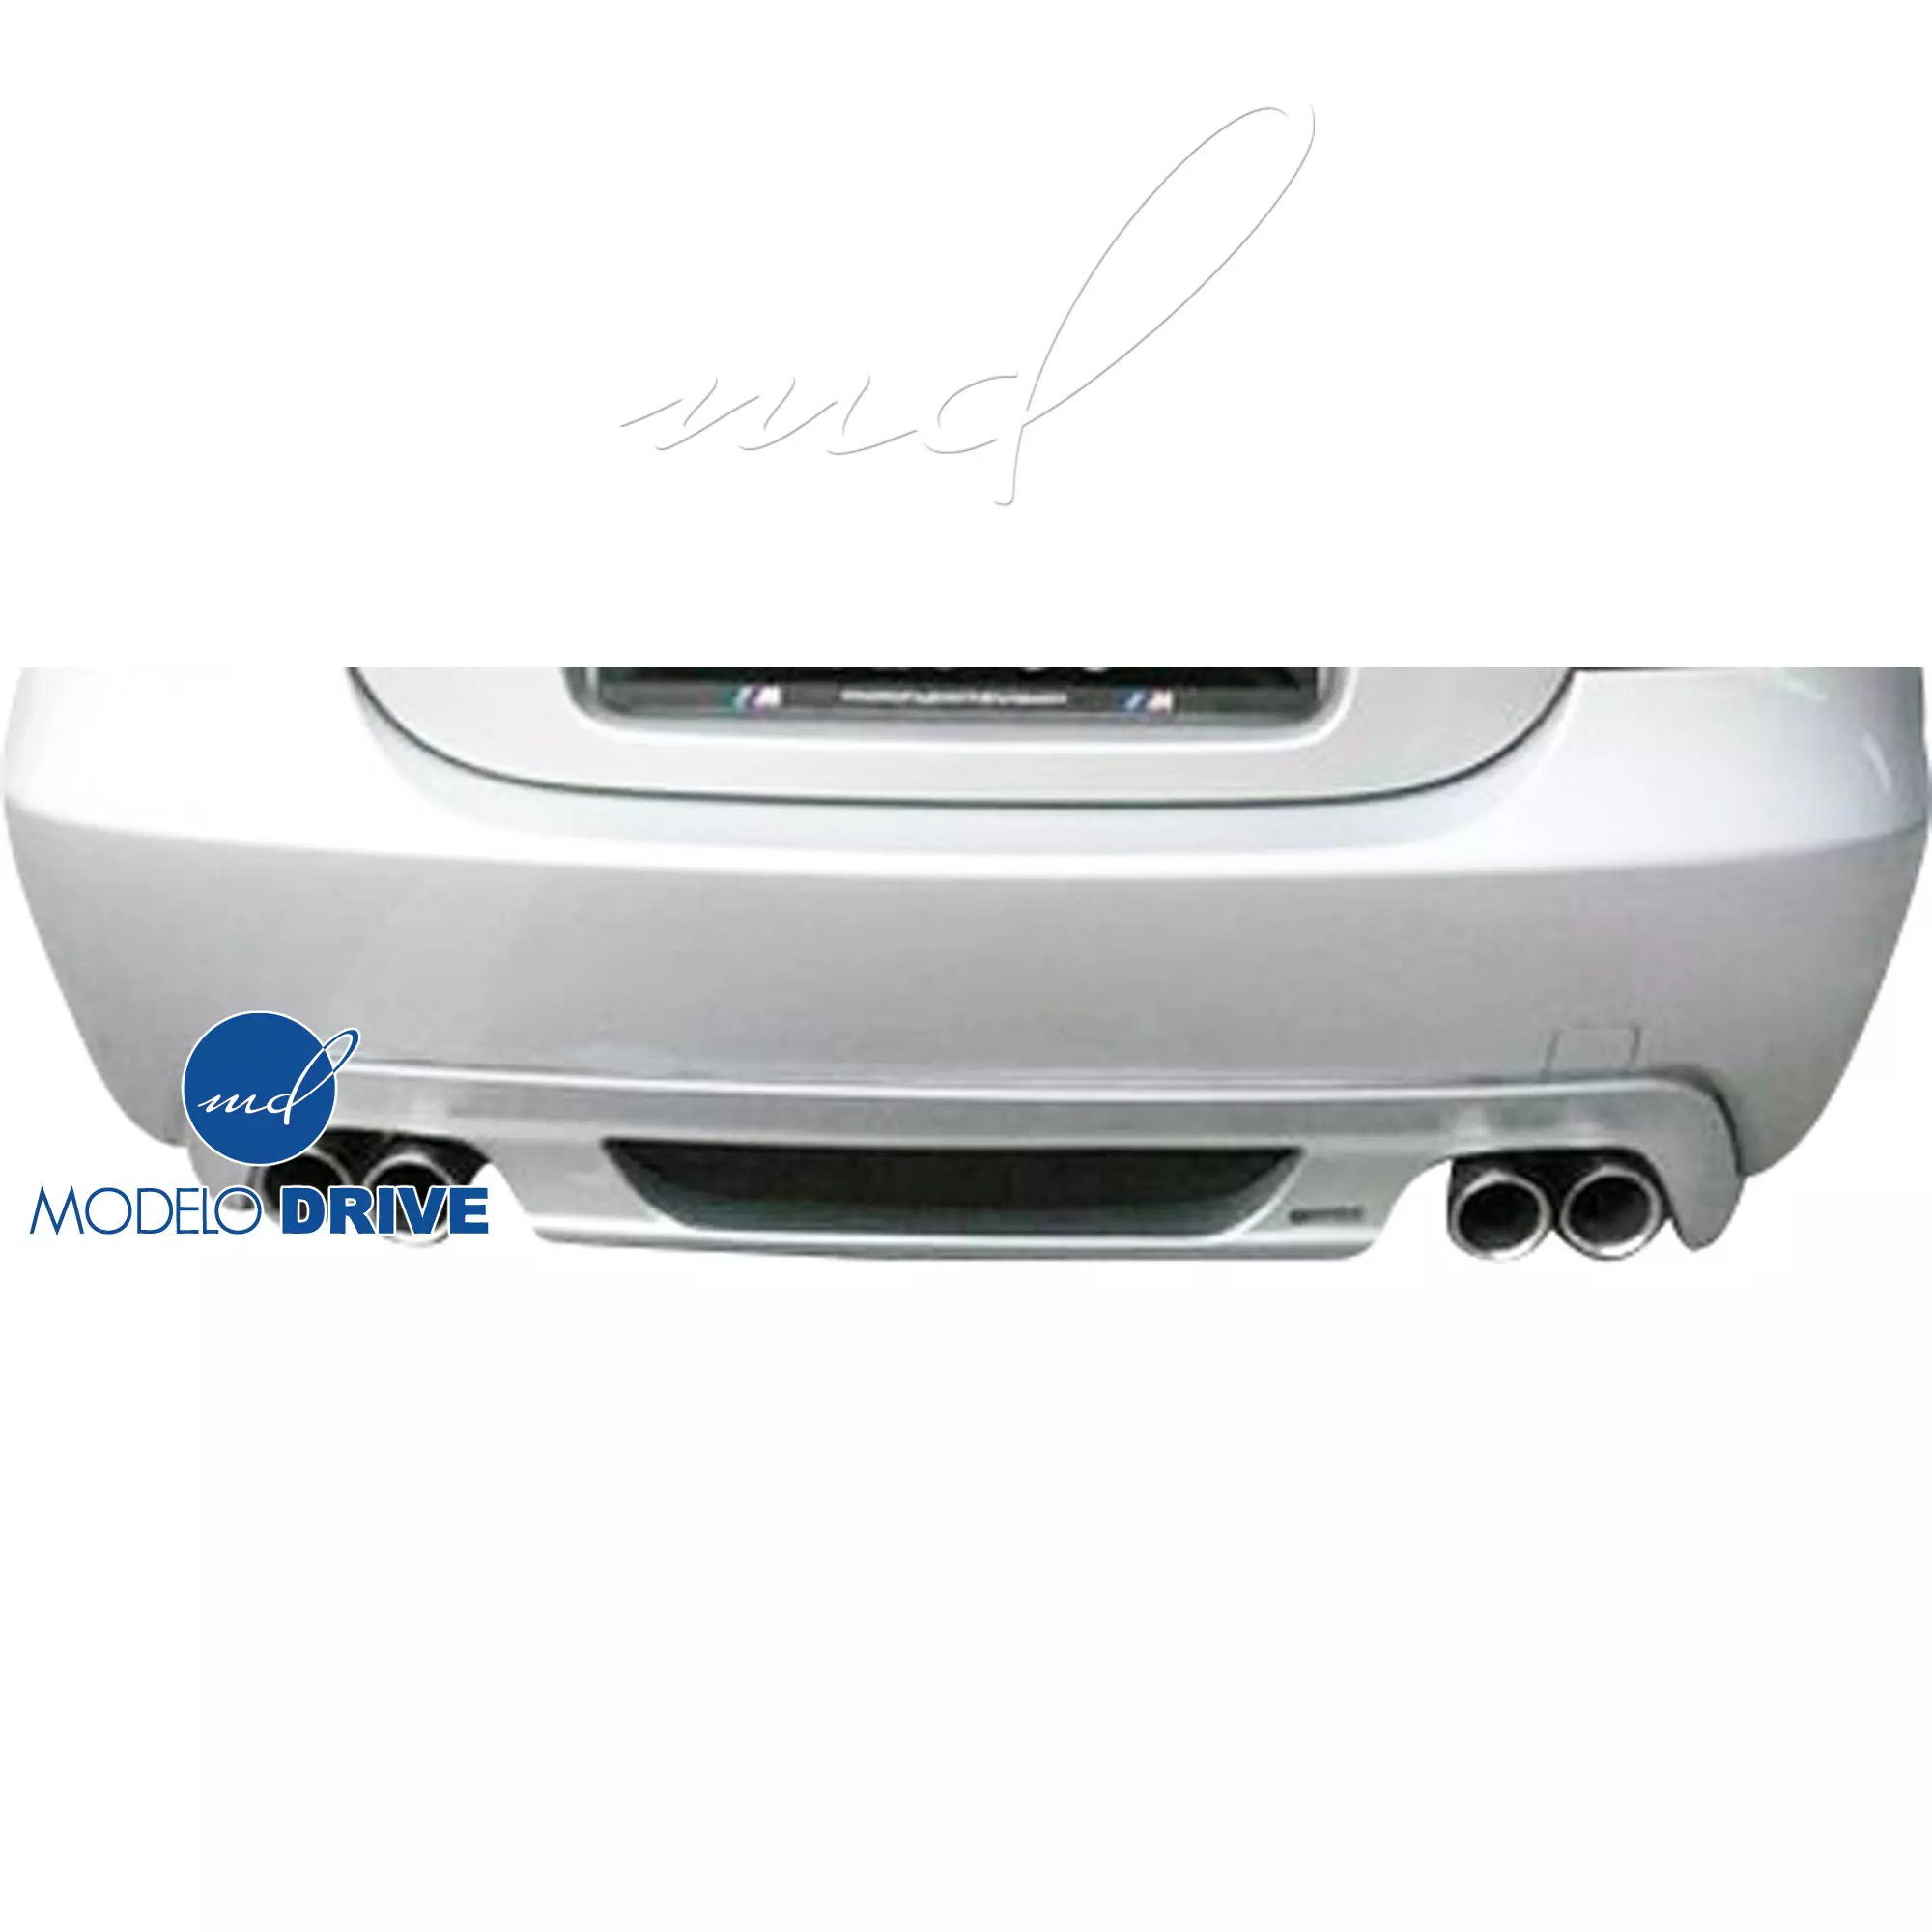 ModeloDrive Plastic HAMA MTEC Rear Diffuser > BMW 5-Series E60 2004-2010 > 4dr - Image 1